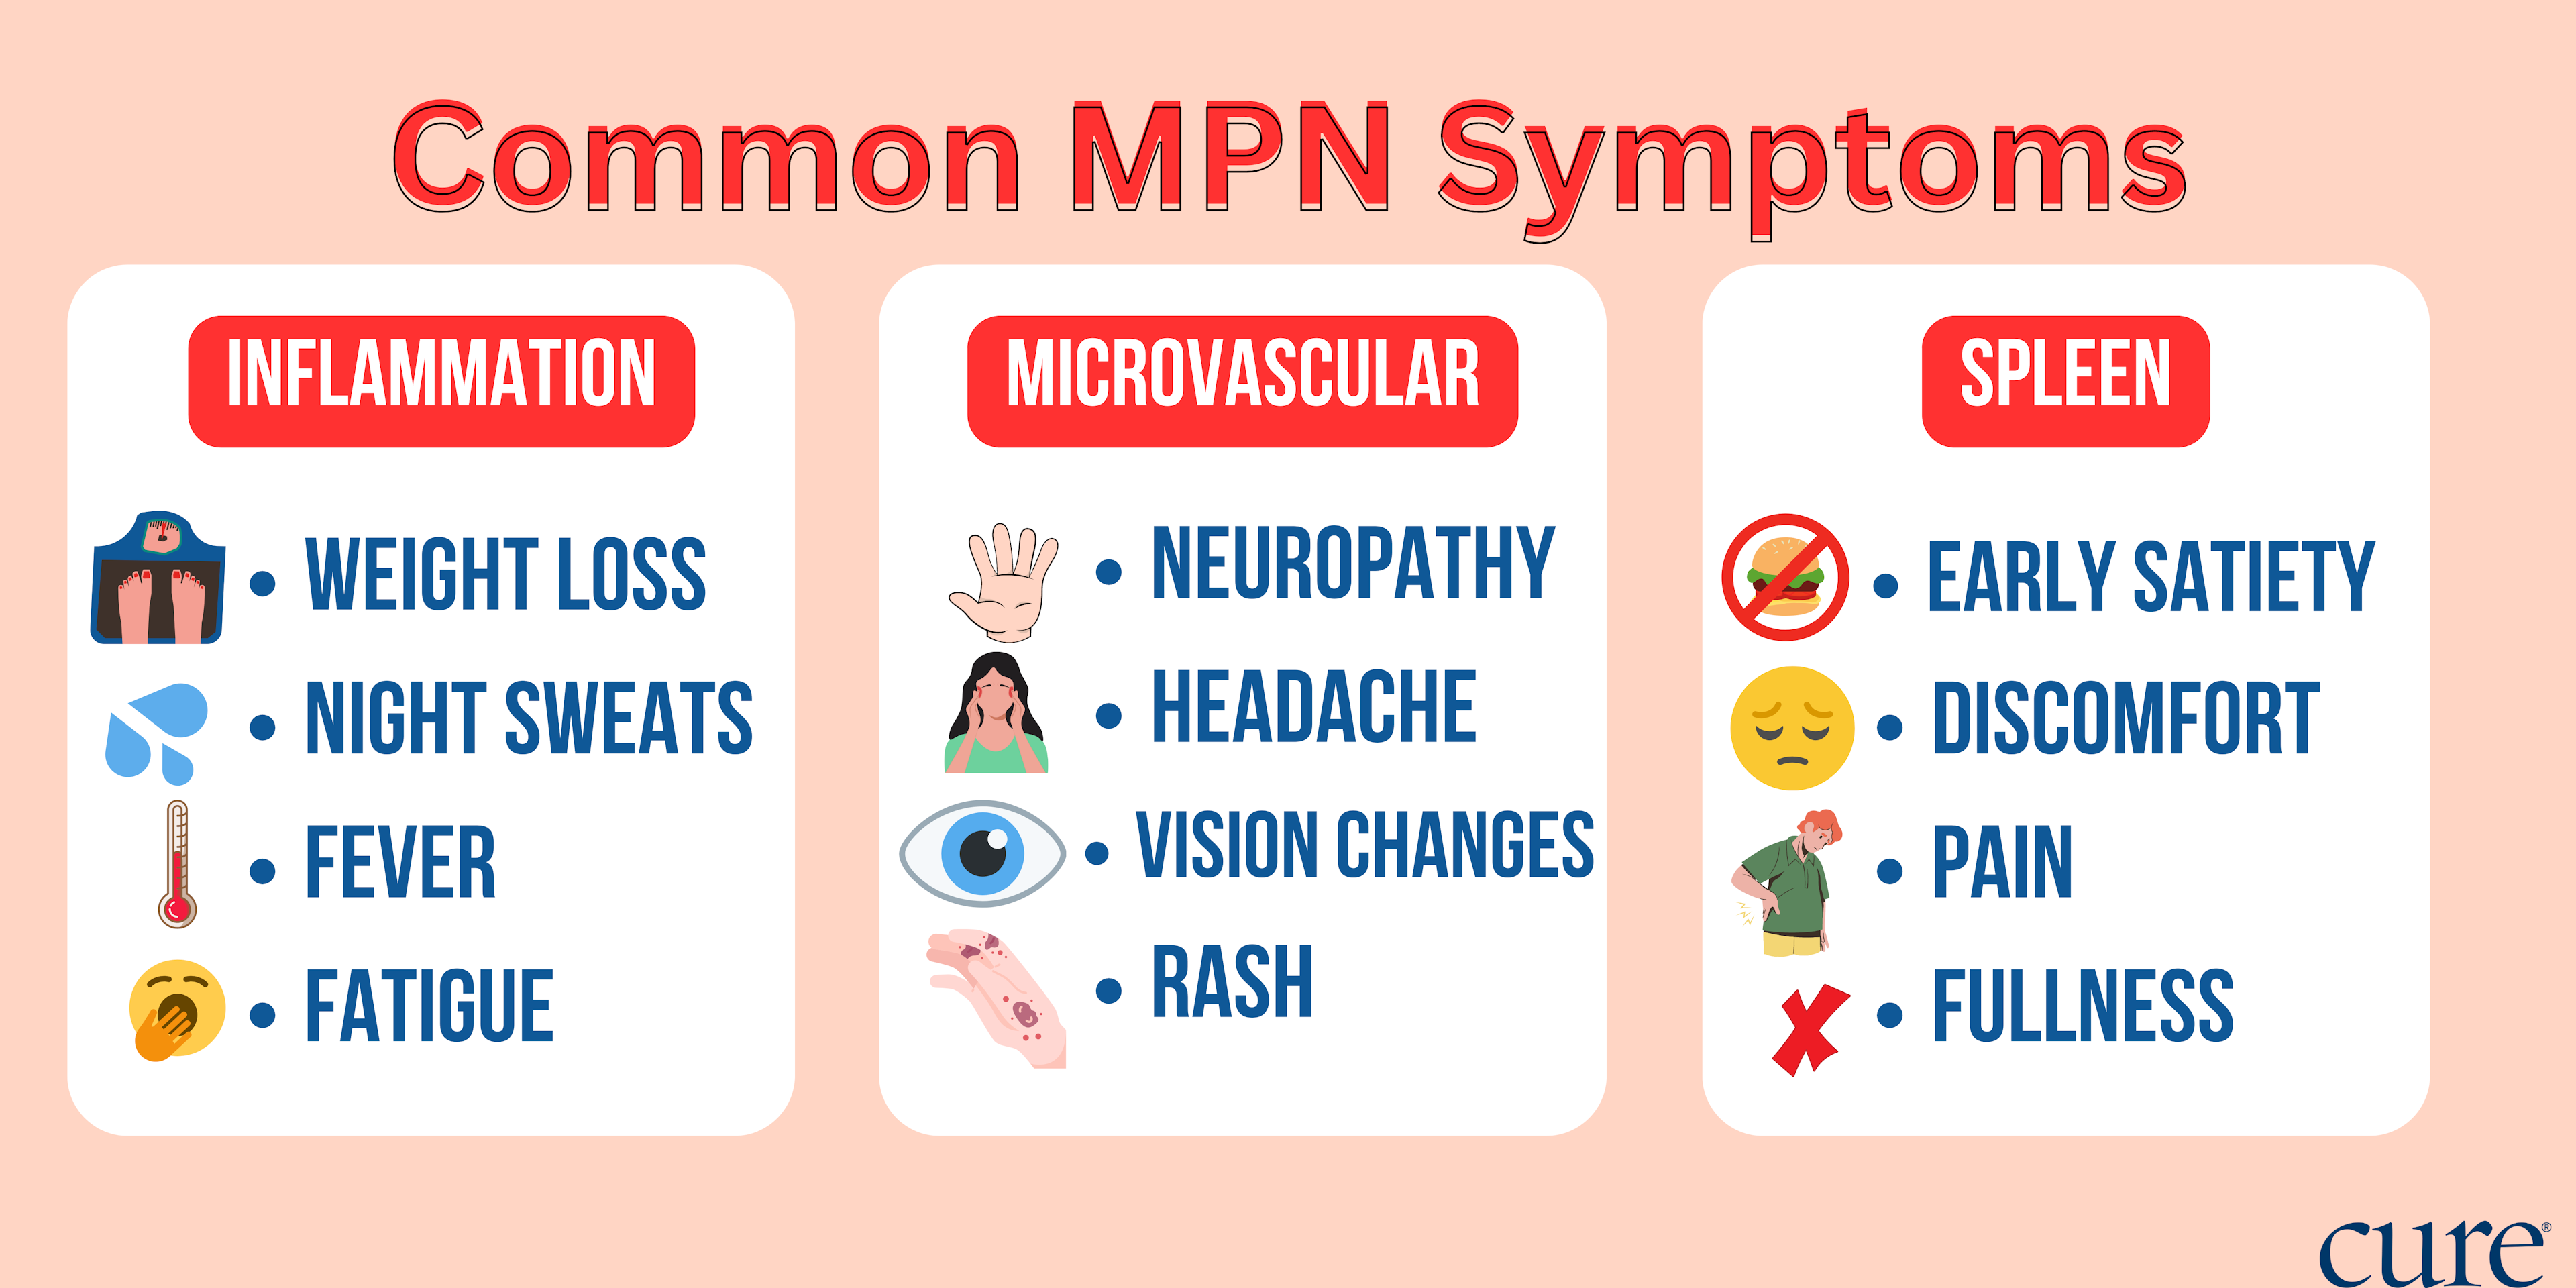 image of MPN symptoms